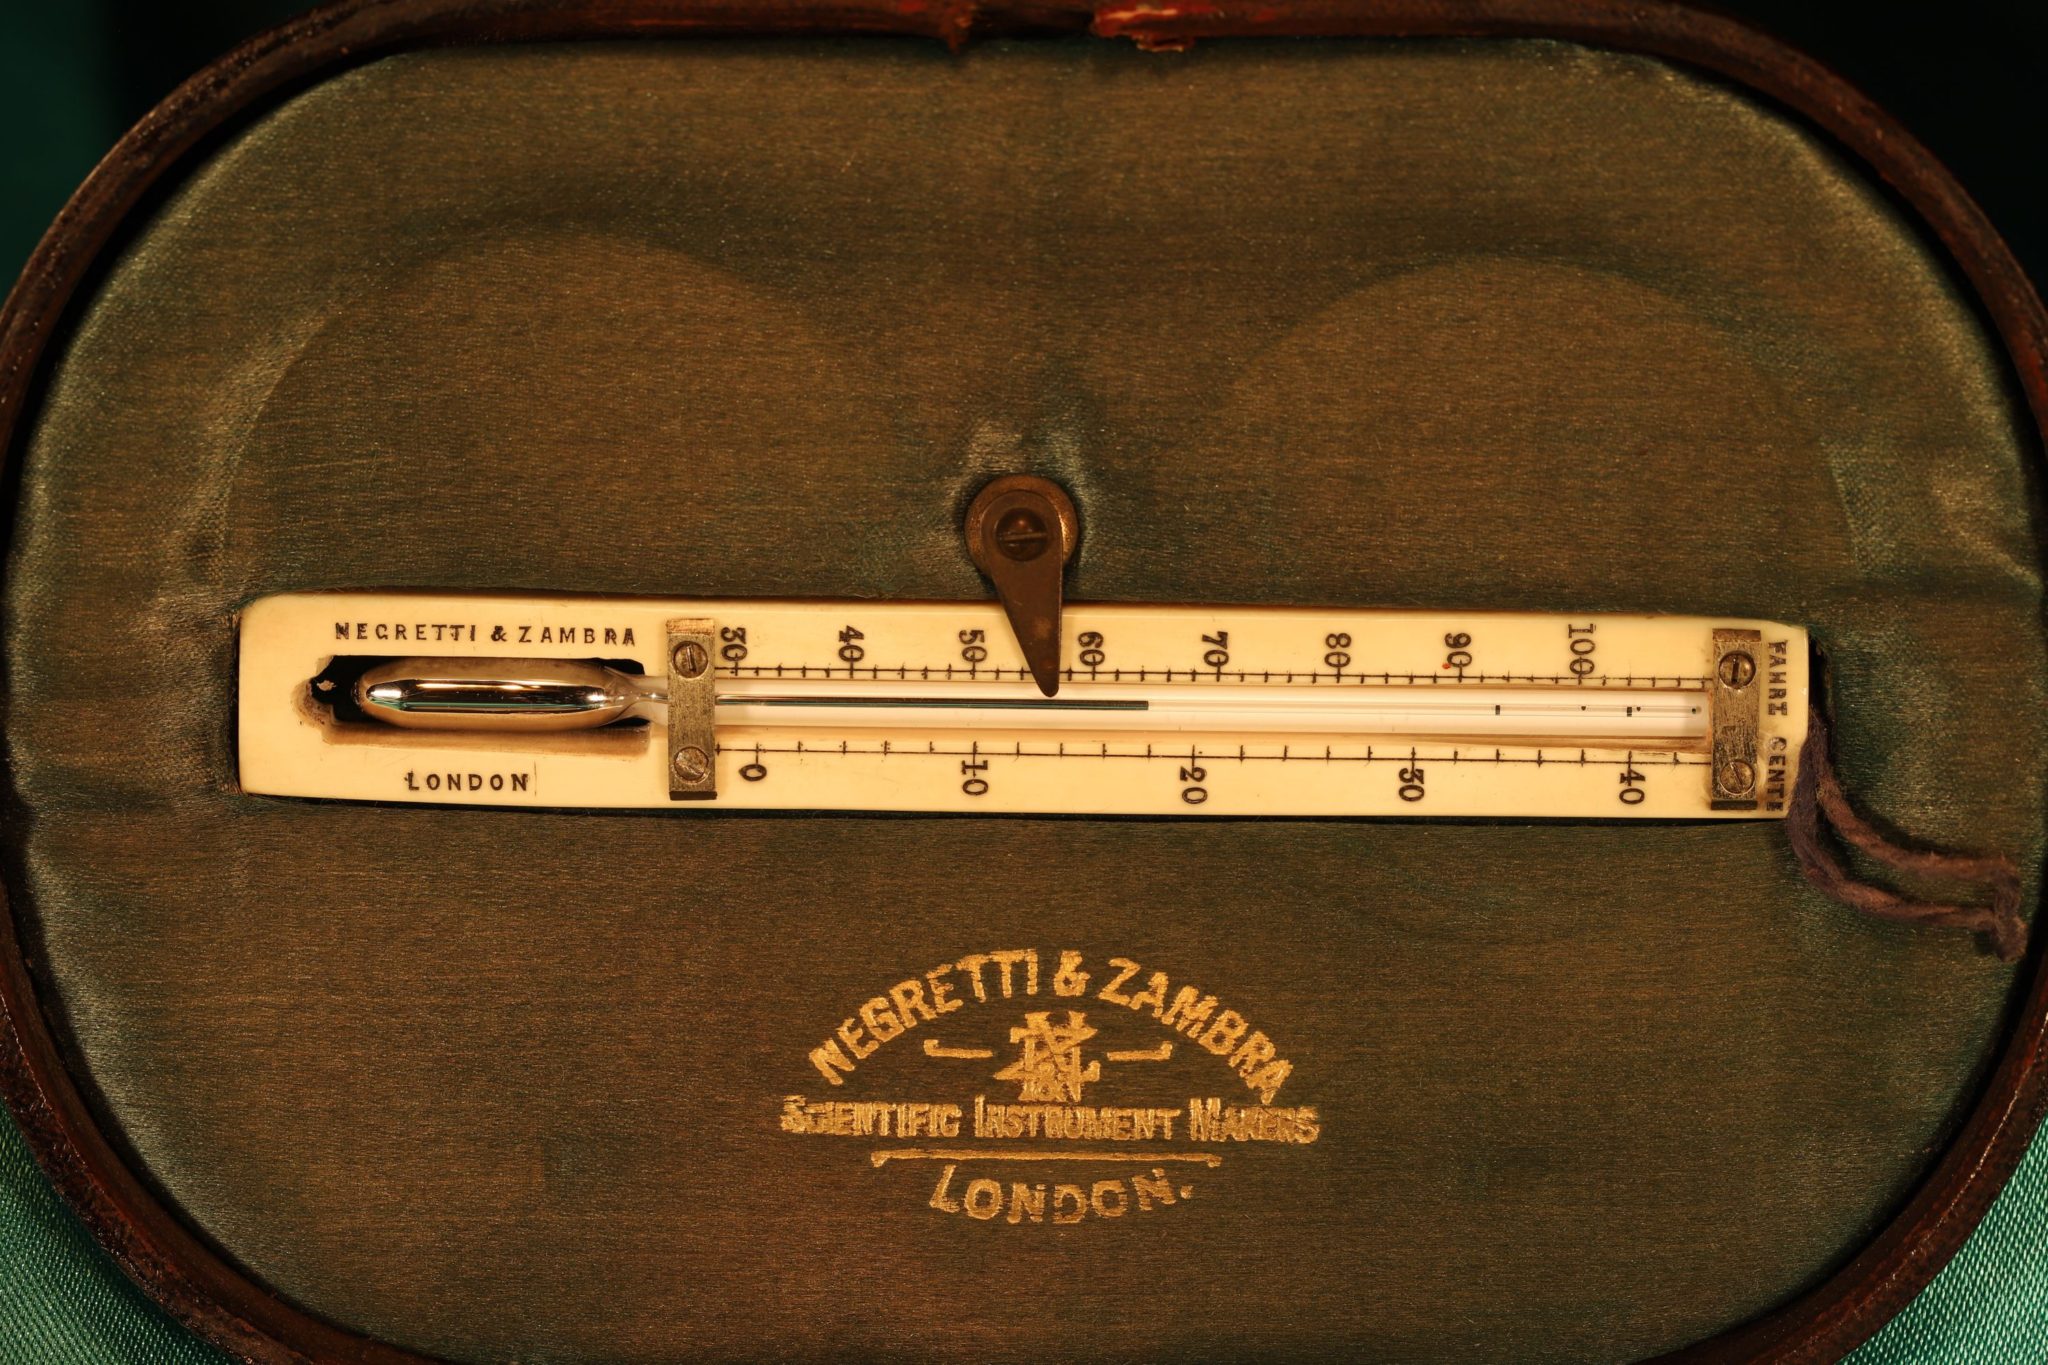 Image of Negretti & Zambra Pocket Barometer Travel Compendium No 20140 c1900